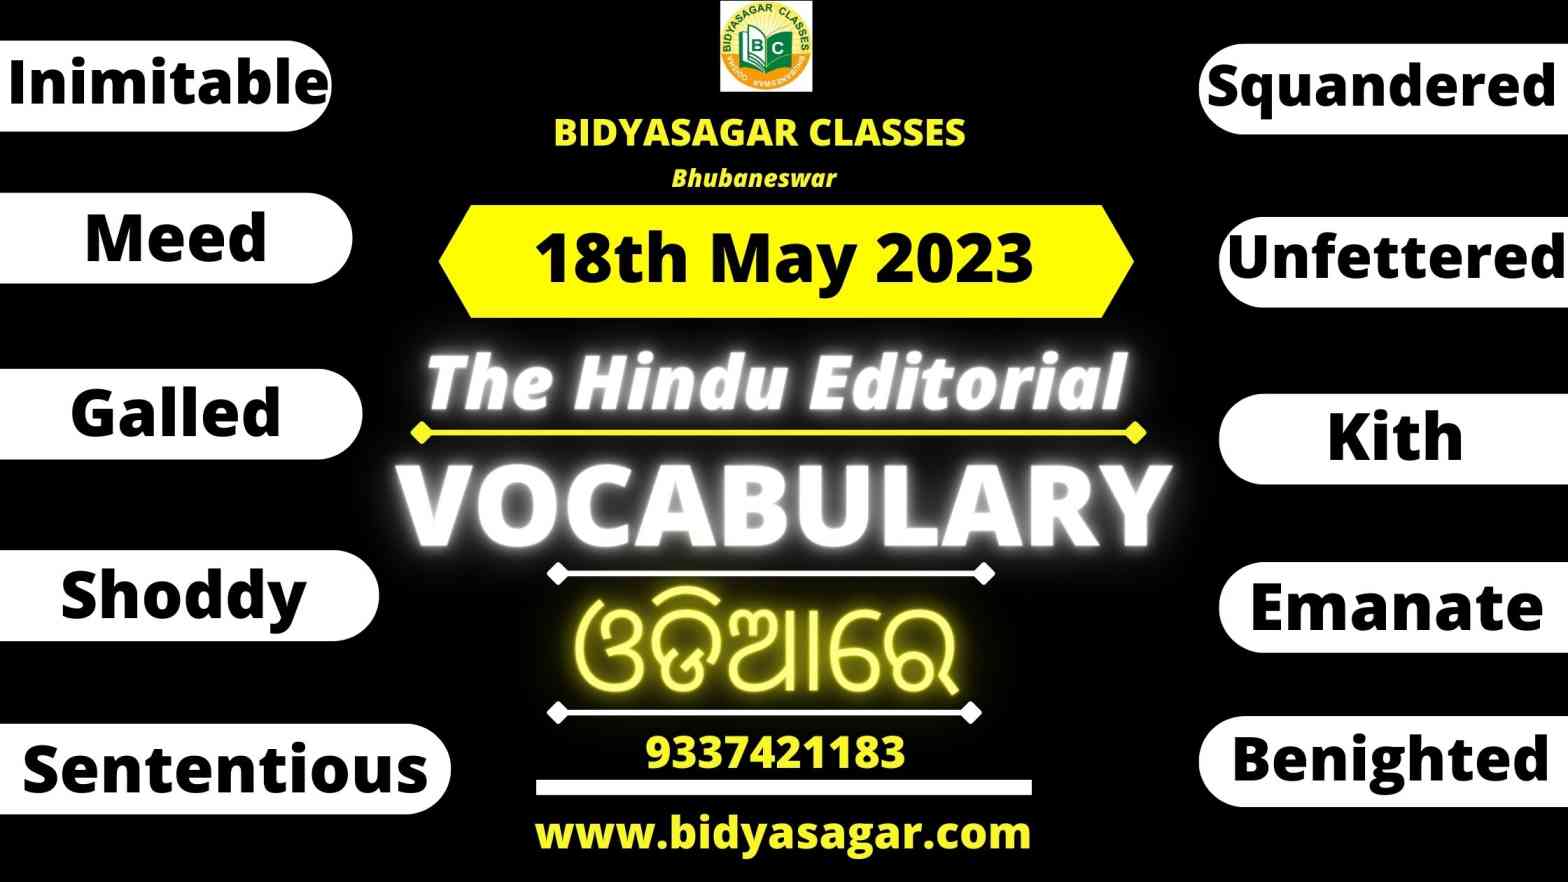 The Hindu Editorial Vocabulary of 18th May 2023